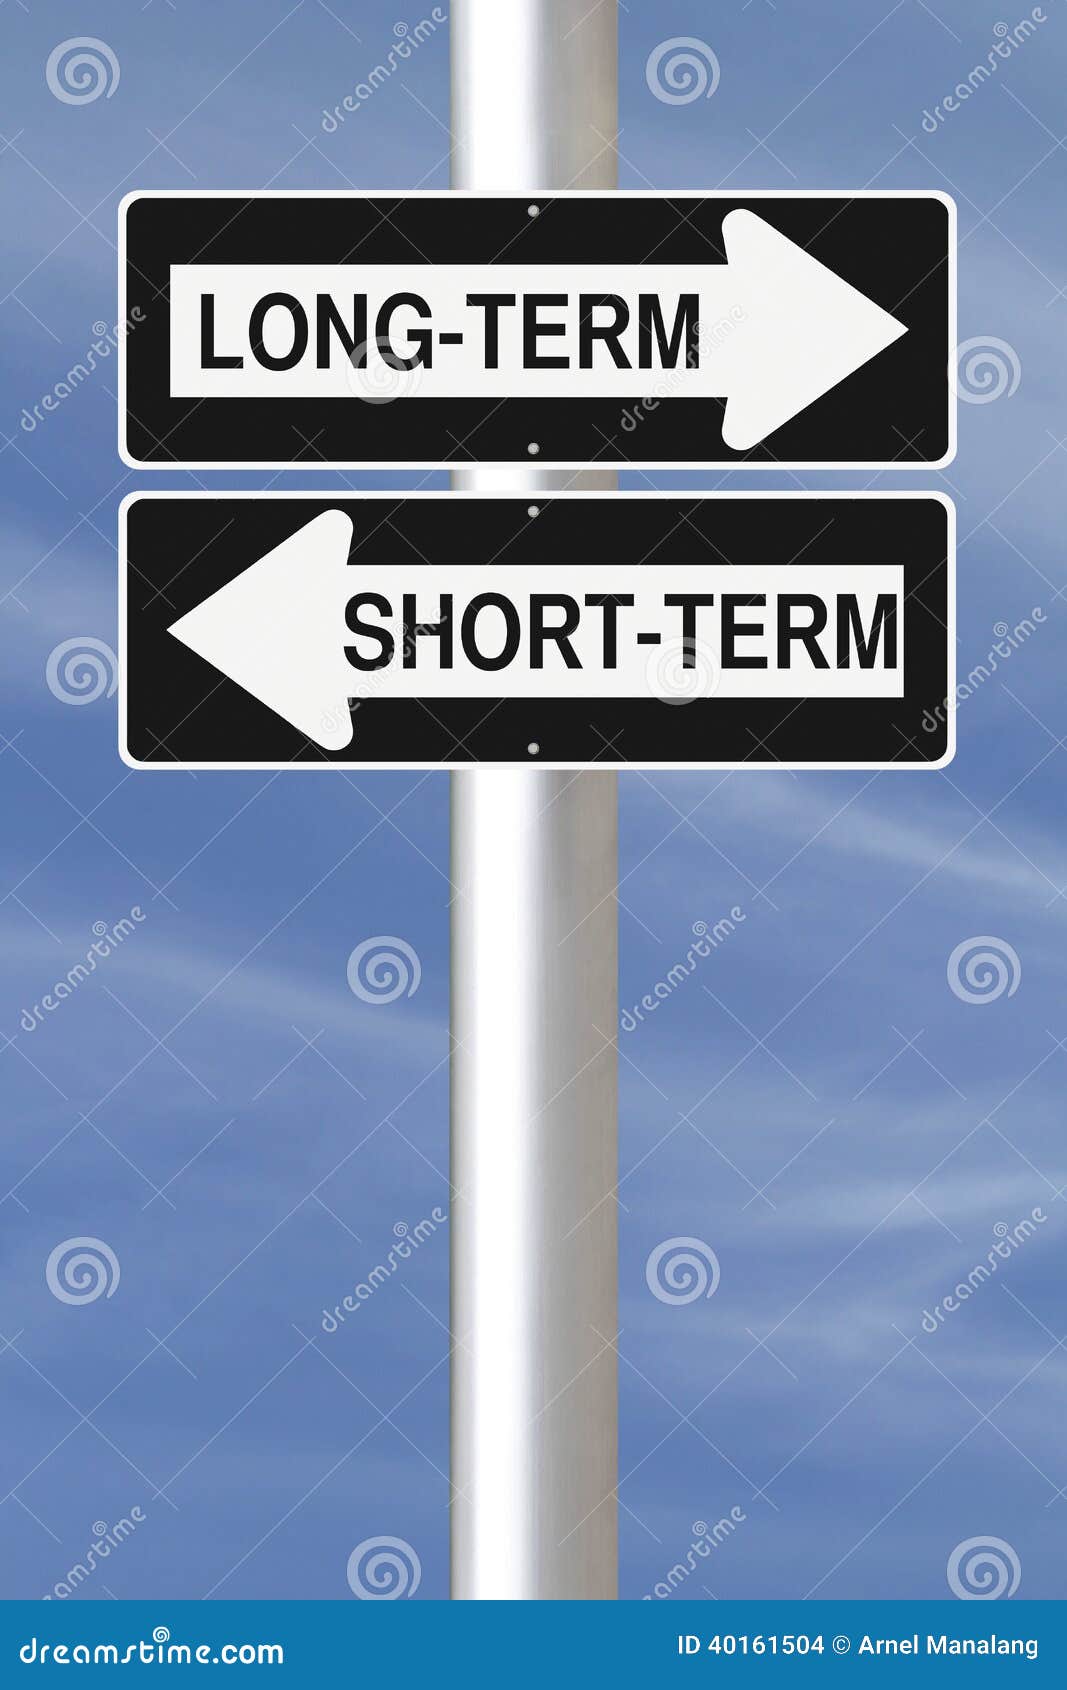 long-term or short-term